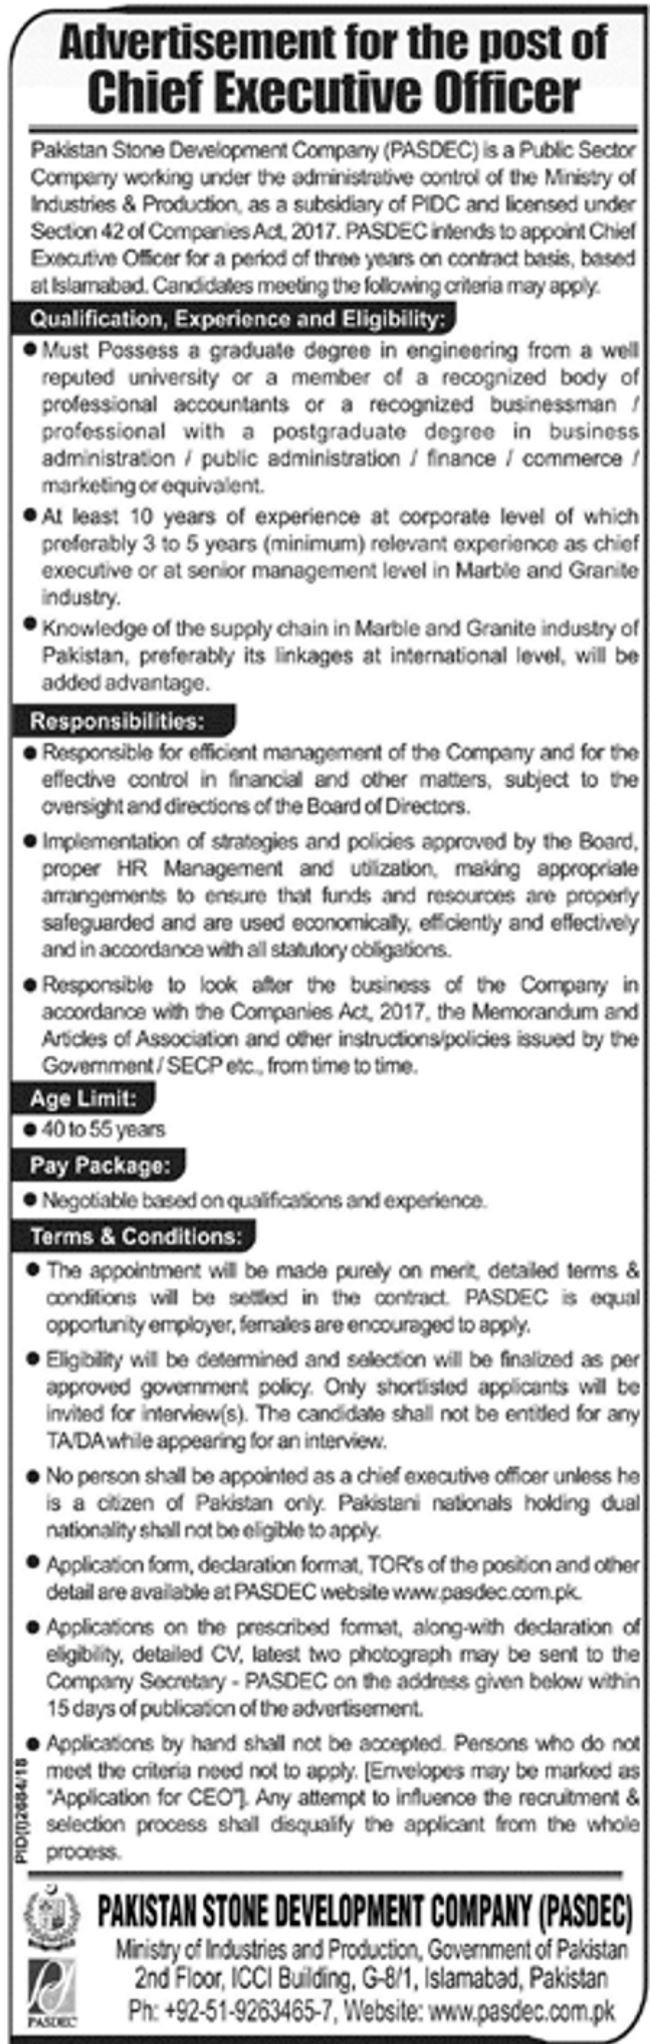 Pakistan Stone Development Company (PASDEC) Jobs 2019 for CEO Post